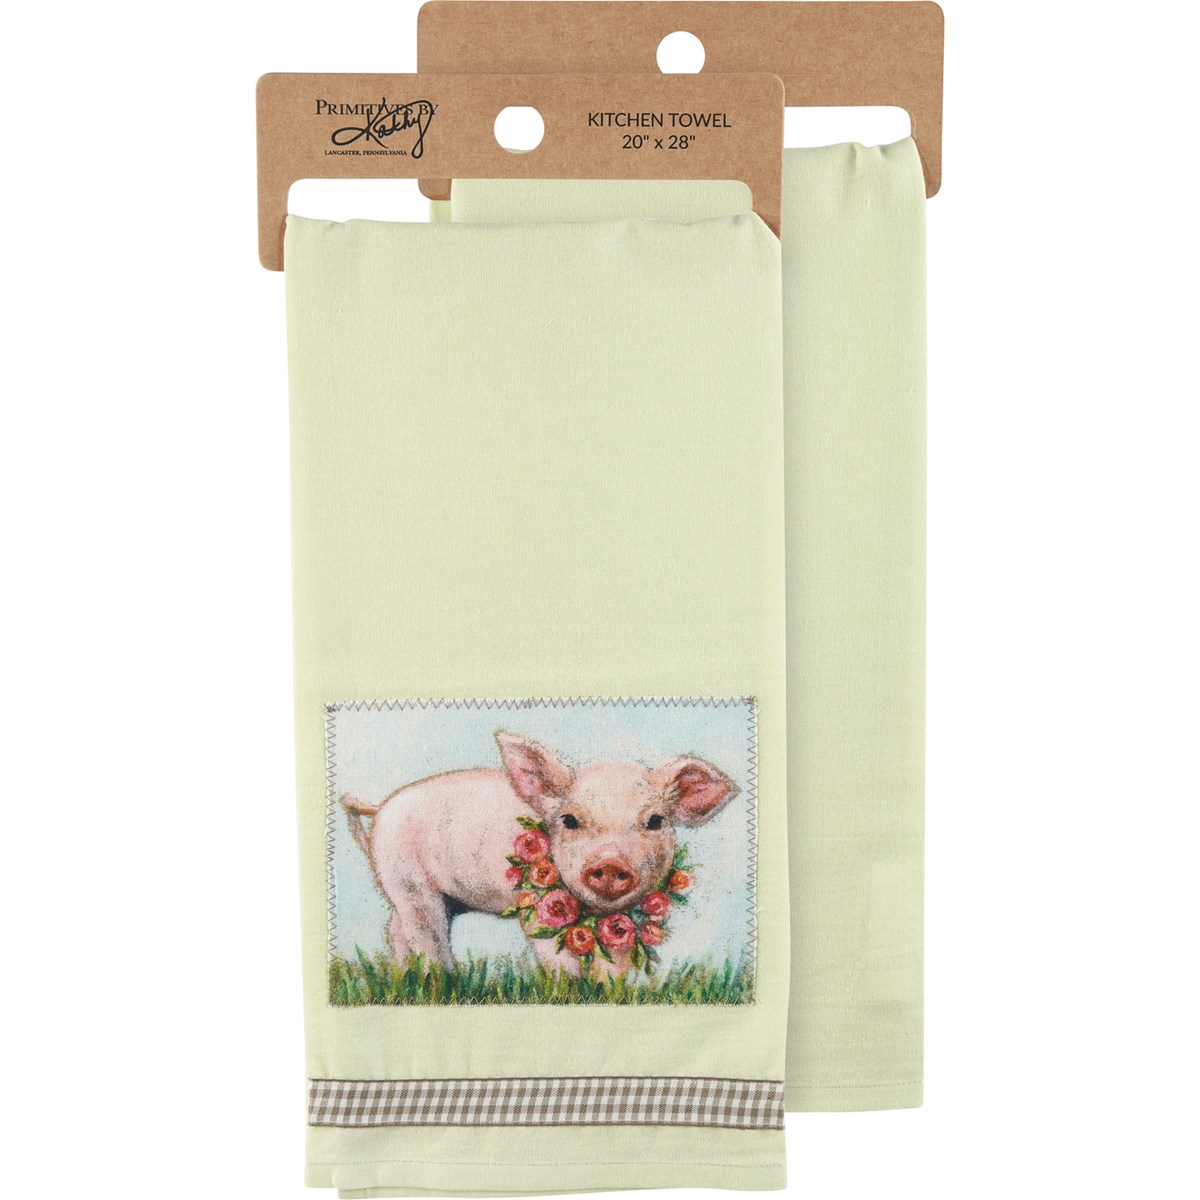 Floral Piglet Kitchen Towel - Cotton, Ribbon